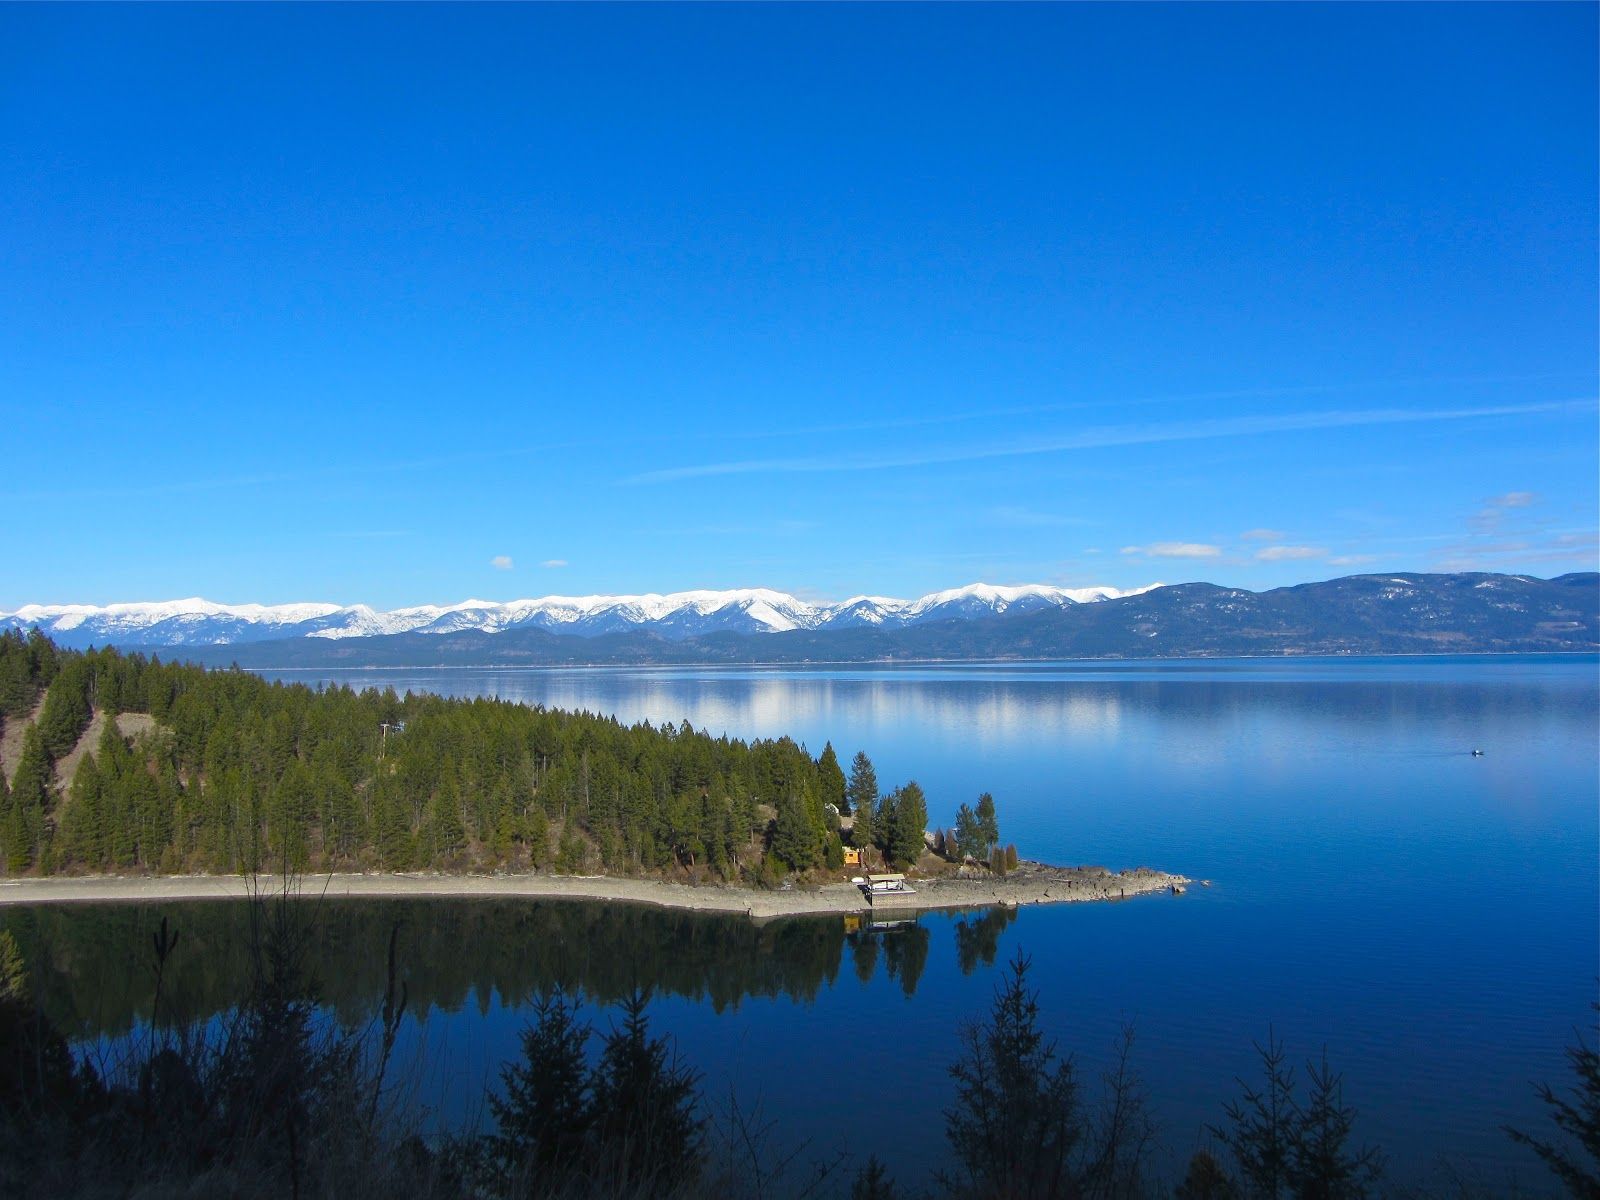 Lake McDonald in Flathead County, Montana, USA